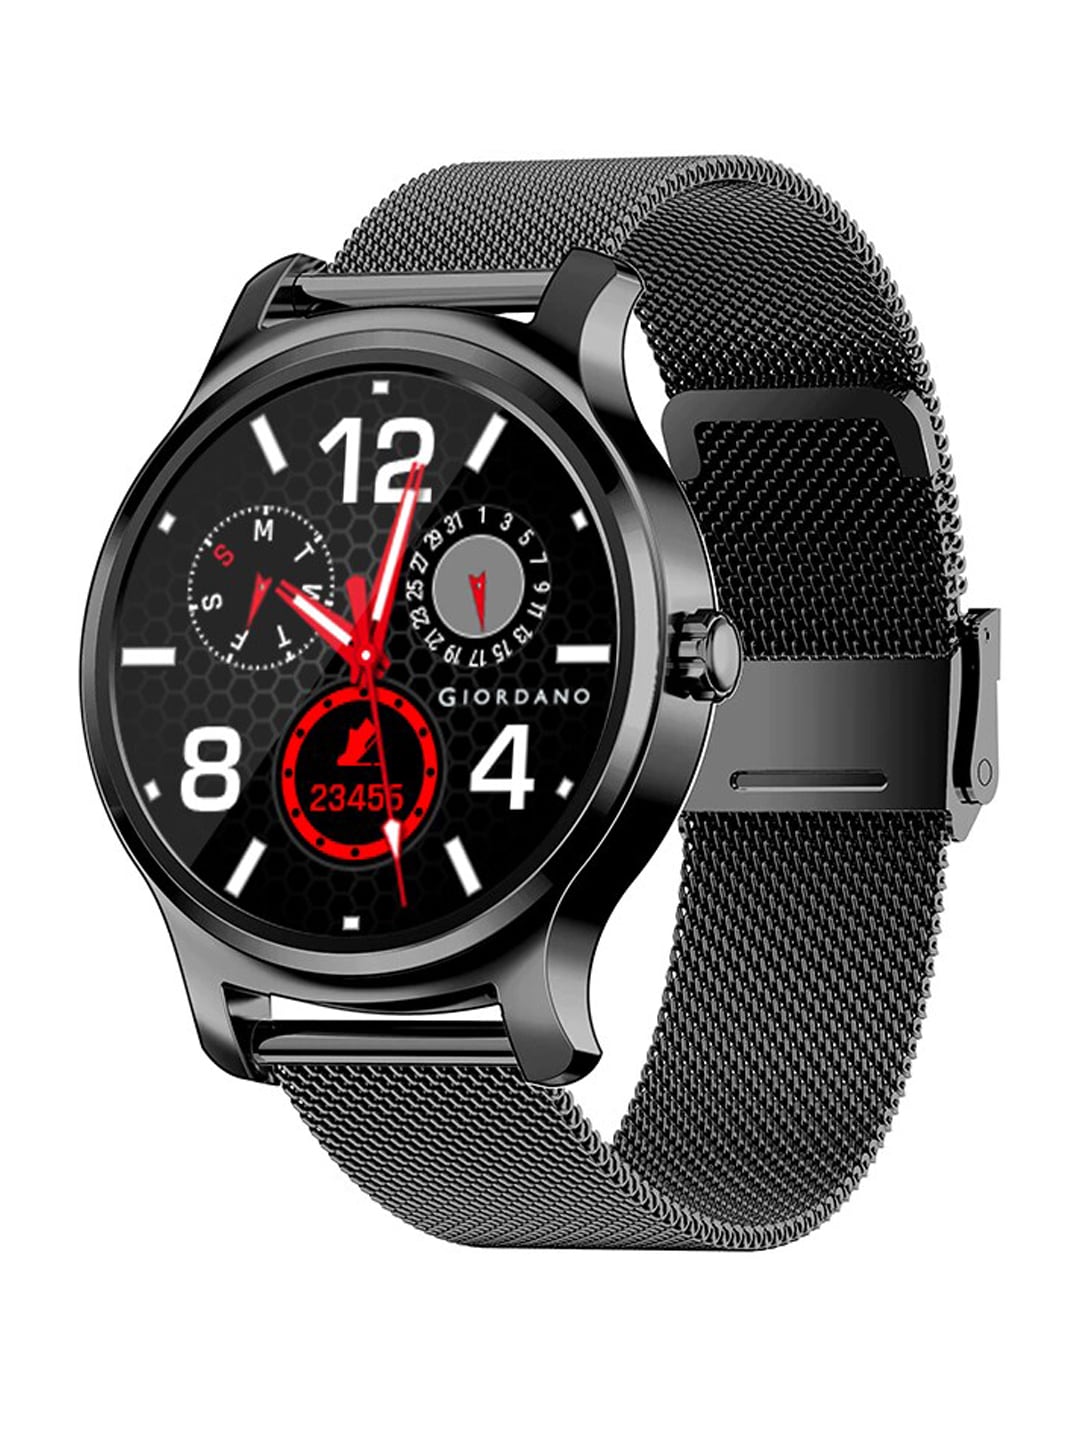 GIORDANO Unisex Black Dial Smartwatch Price in India